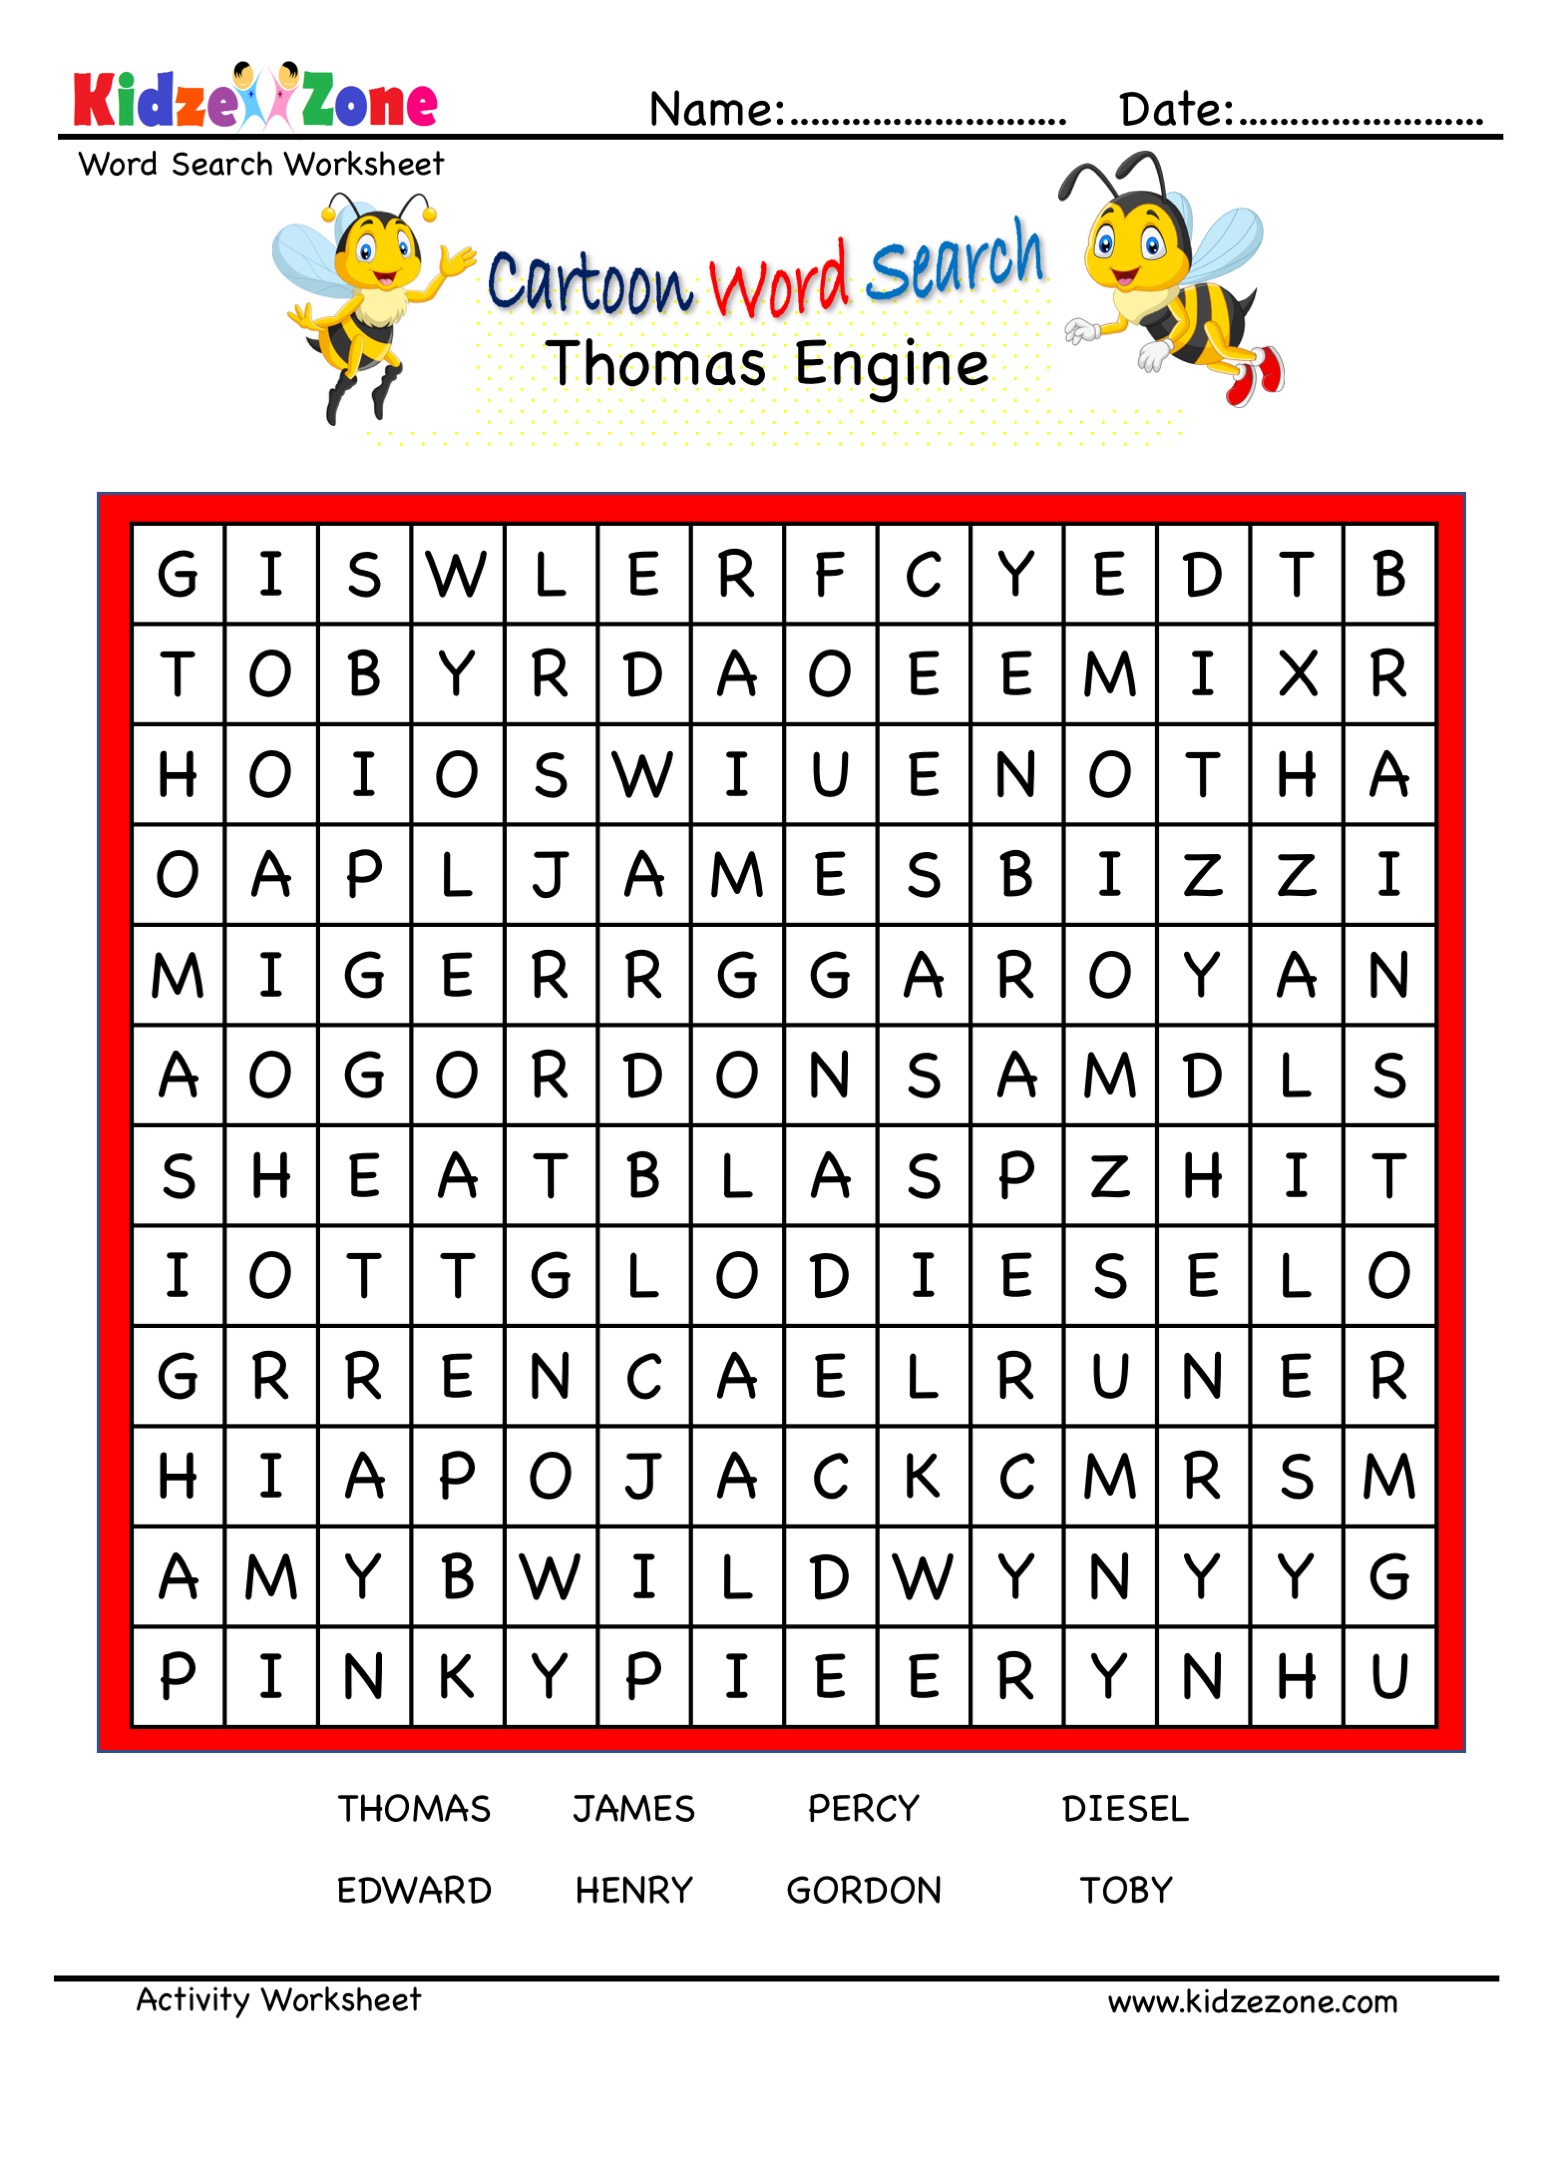 Thomas Engine Cartoon Character Word Puzzle - KidzeZone